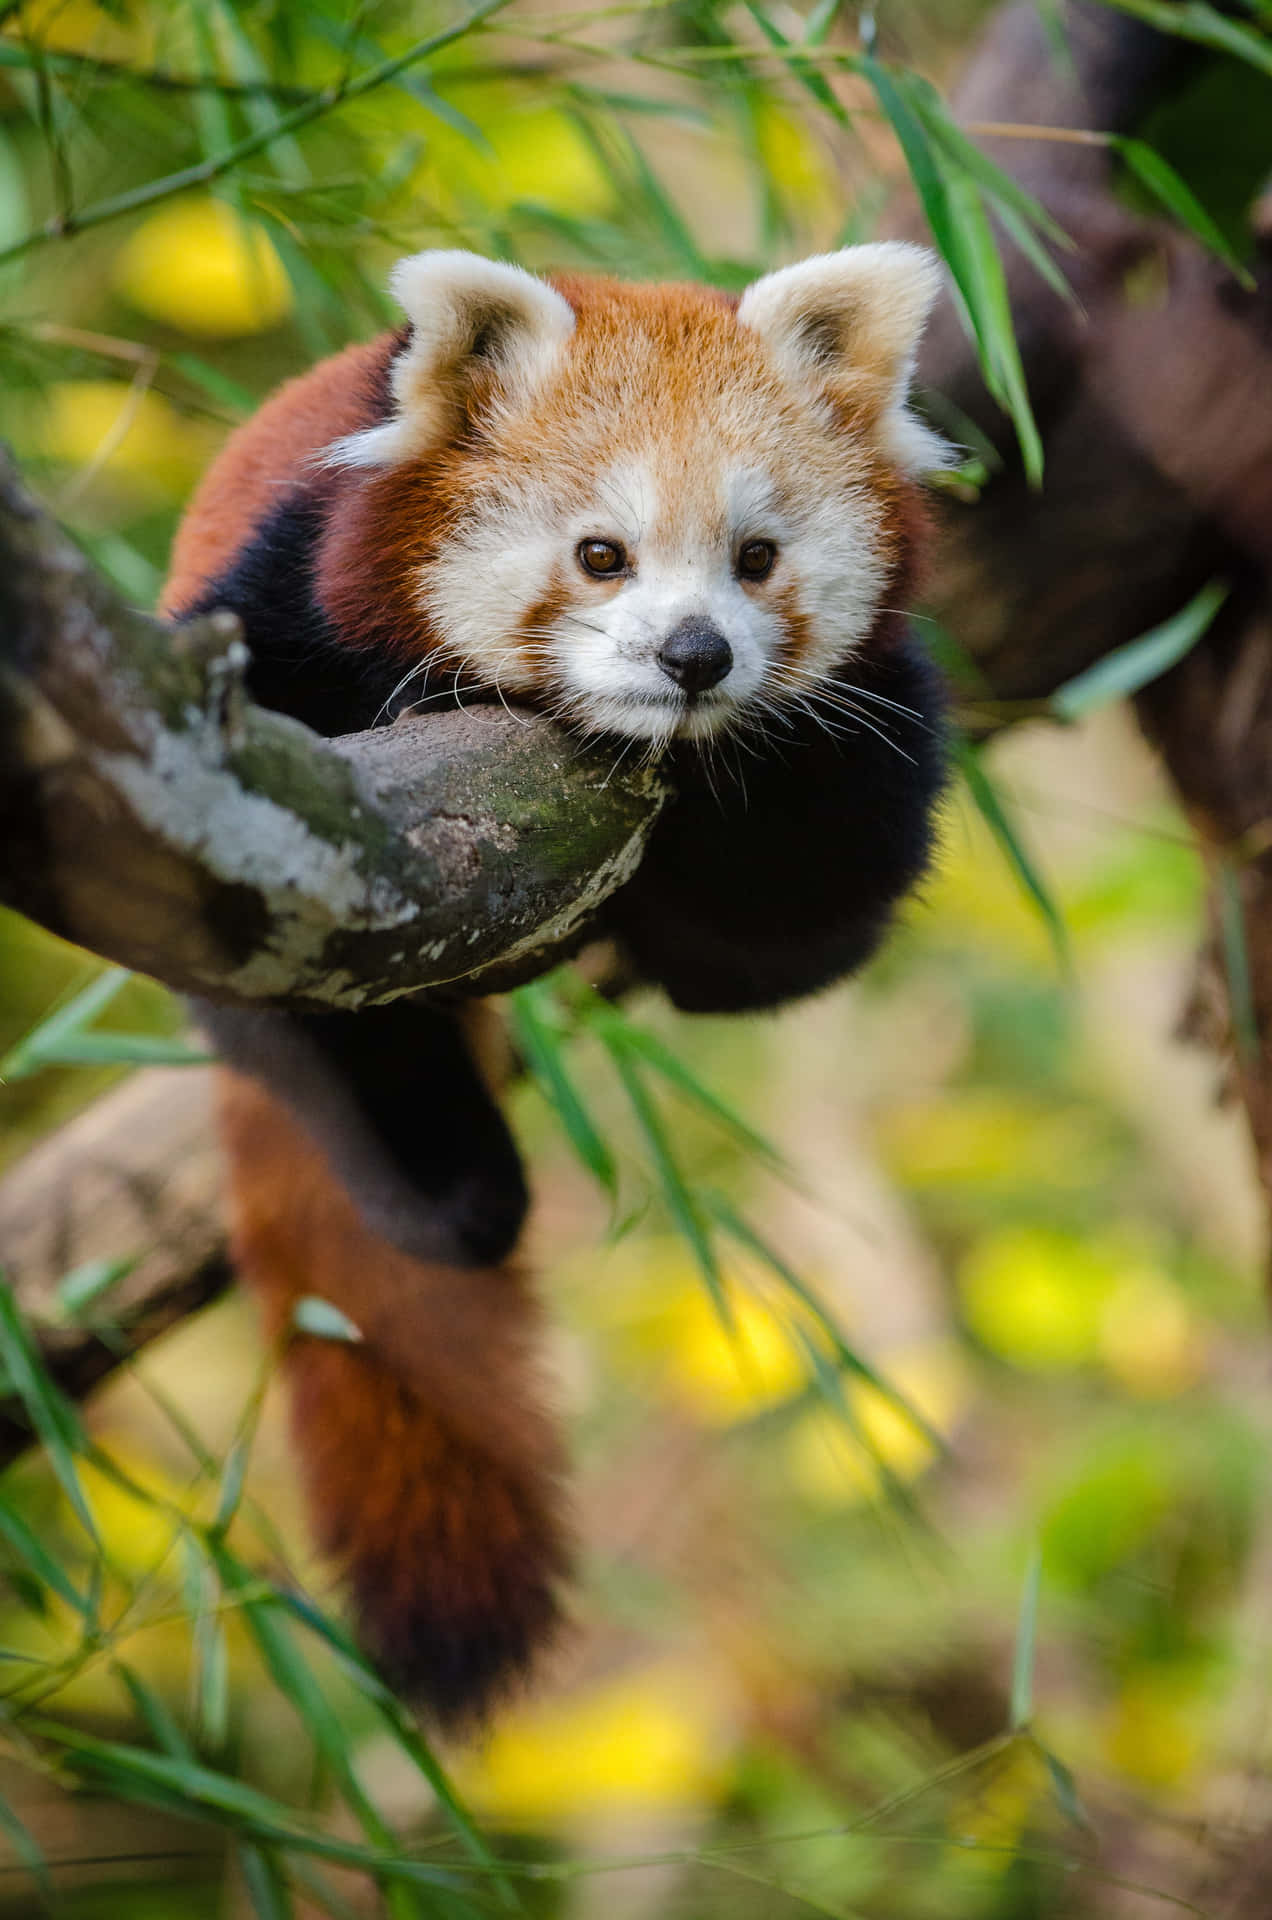 Cute Red Panda Sitting in a Tree¬¬